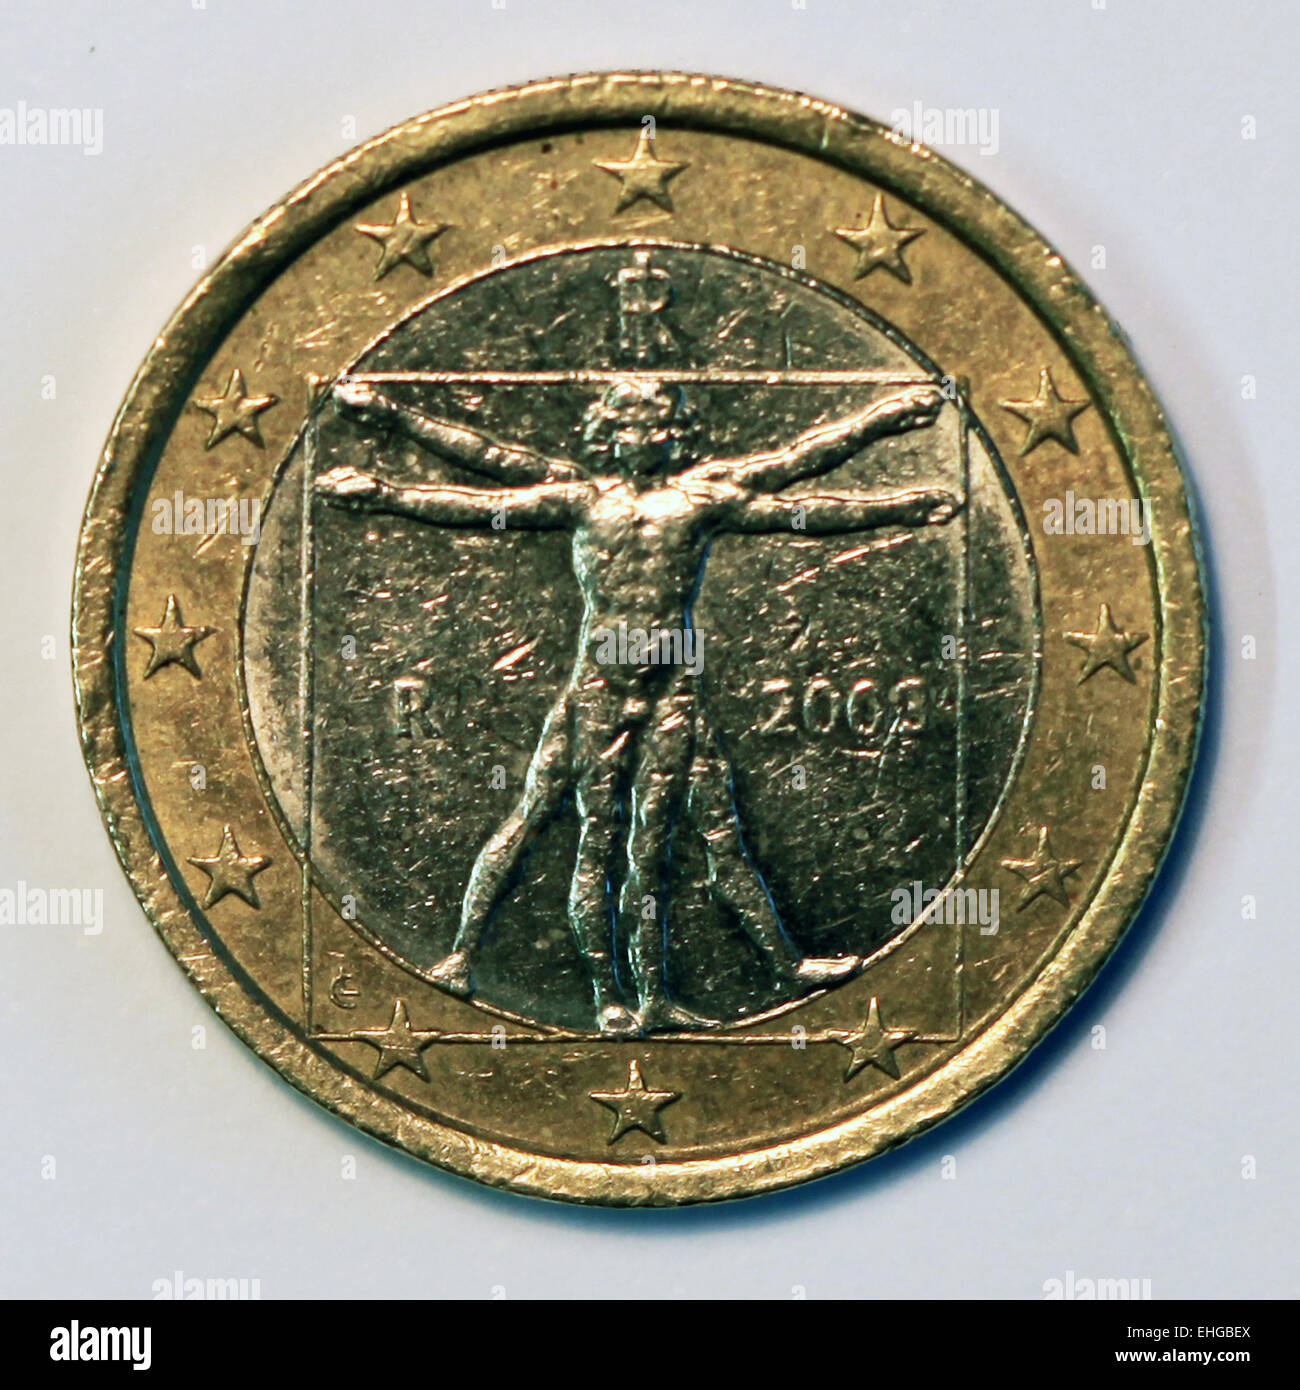 ITALIAN ONE EURO COIN Stock Photo